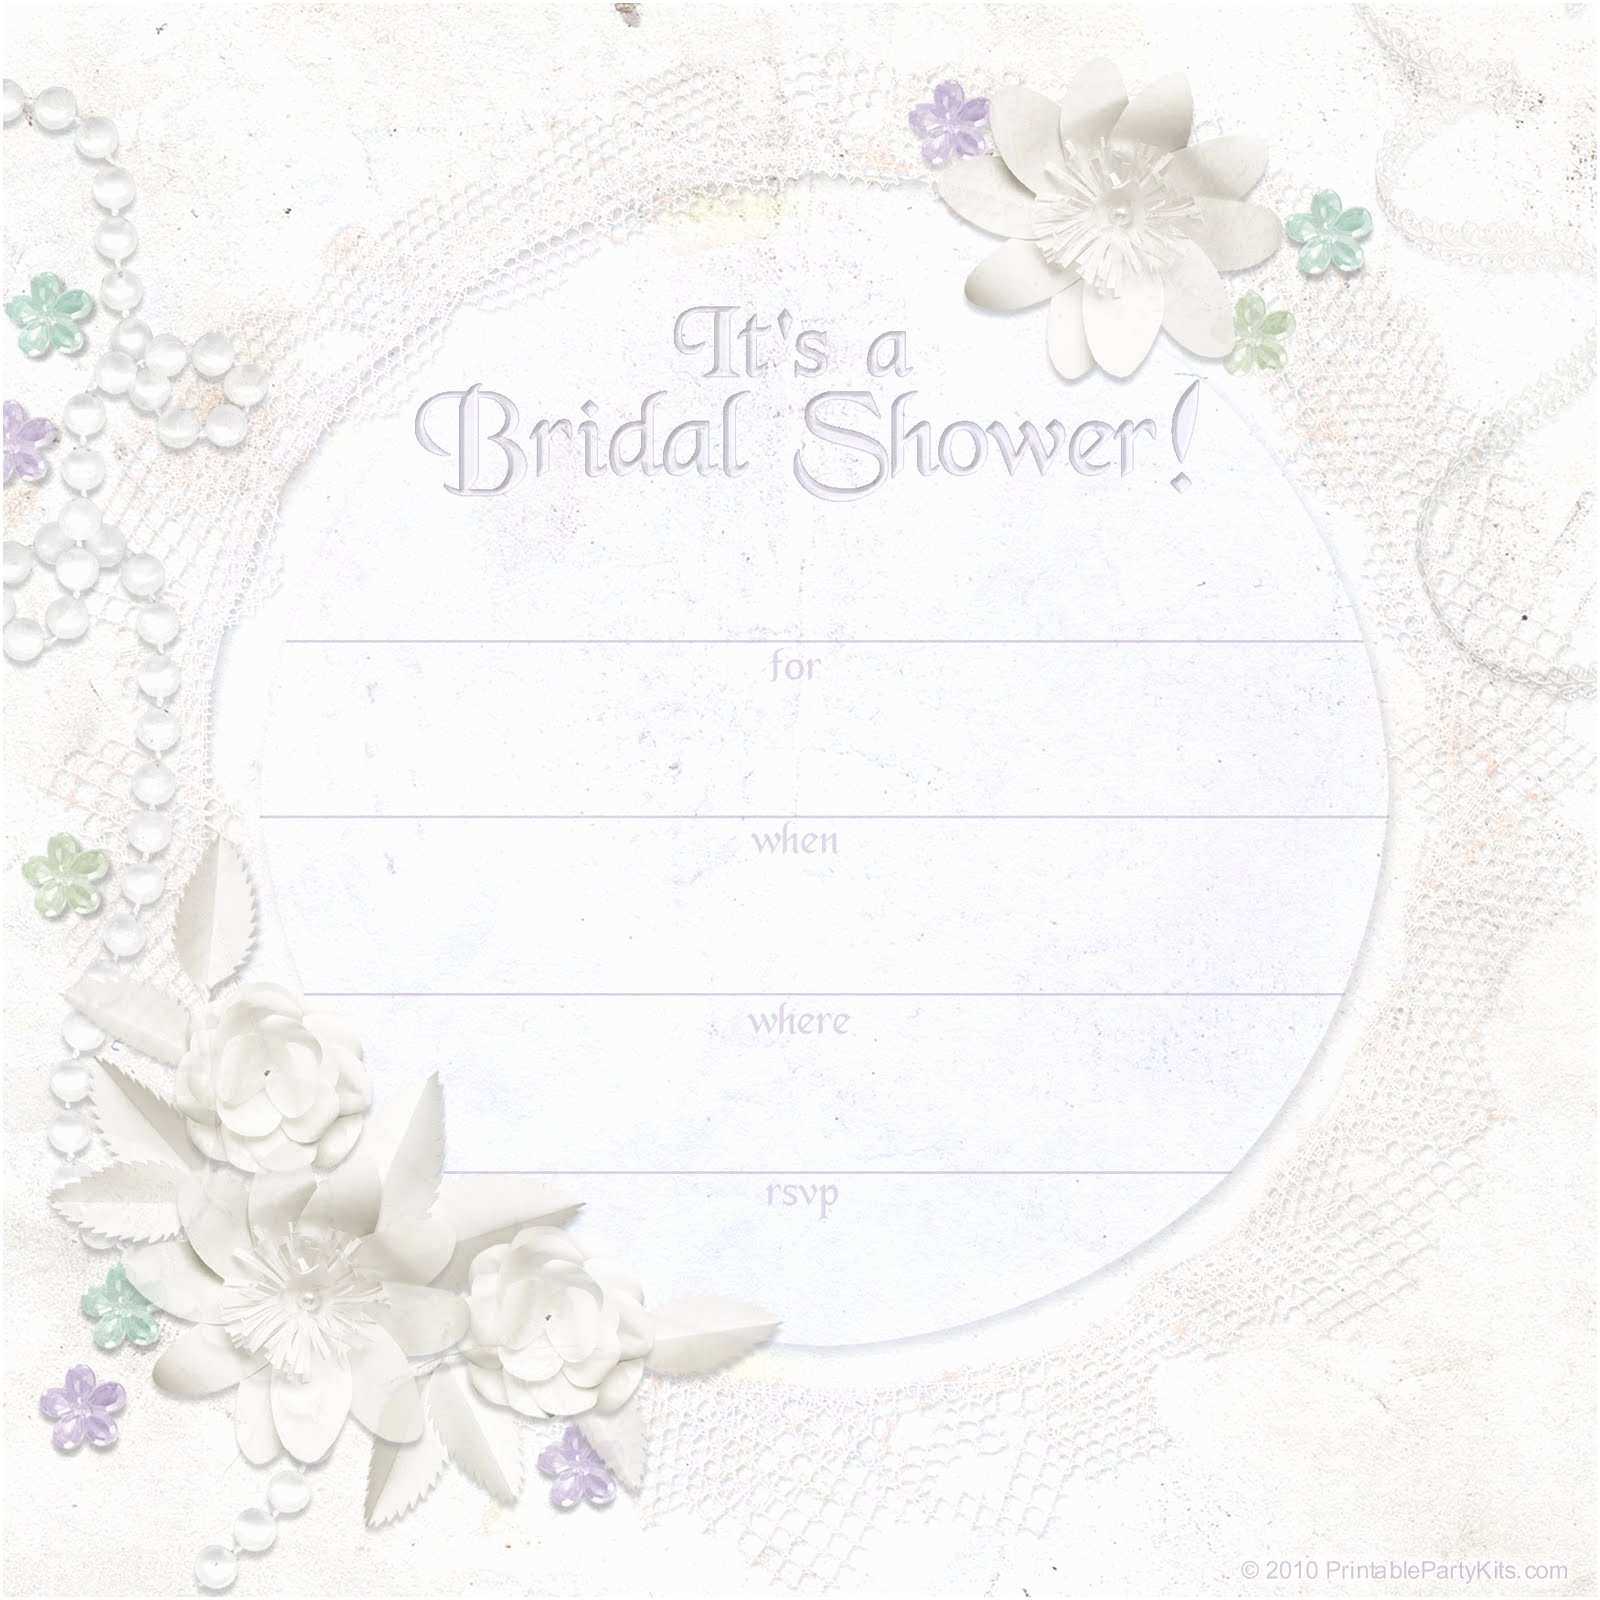 free-wedding-shower-invitation-templates-bridal-shower-within-blank-bridal-shower-invitations